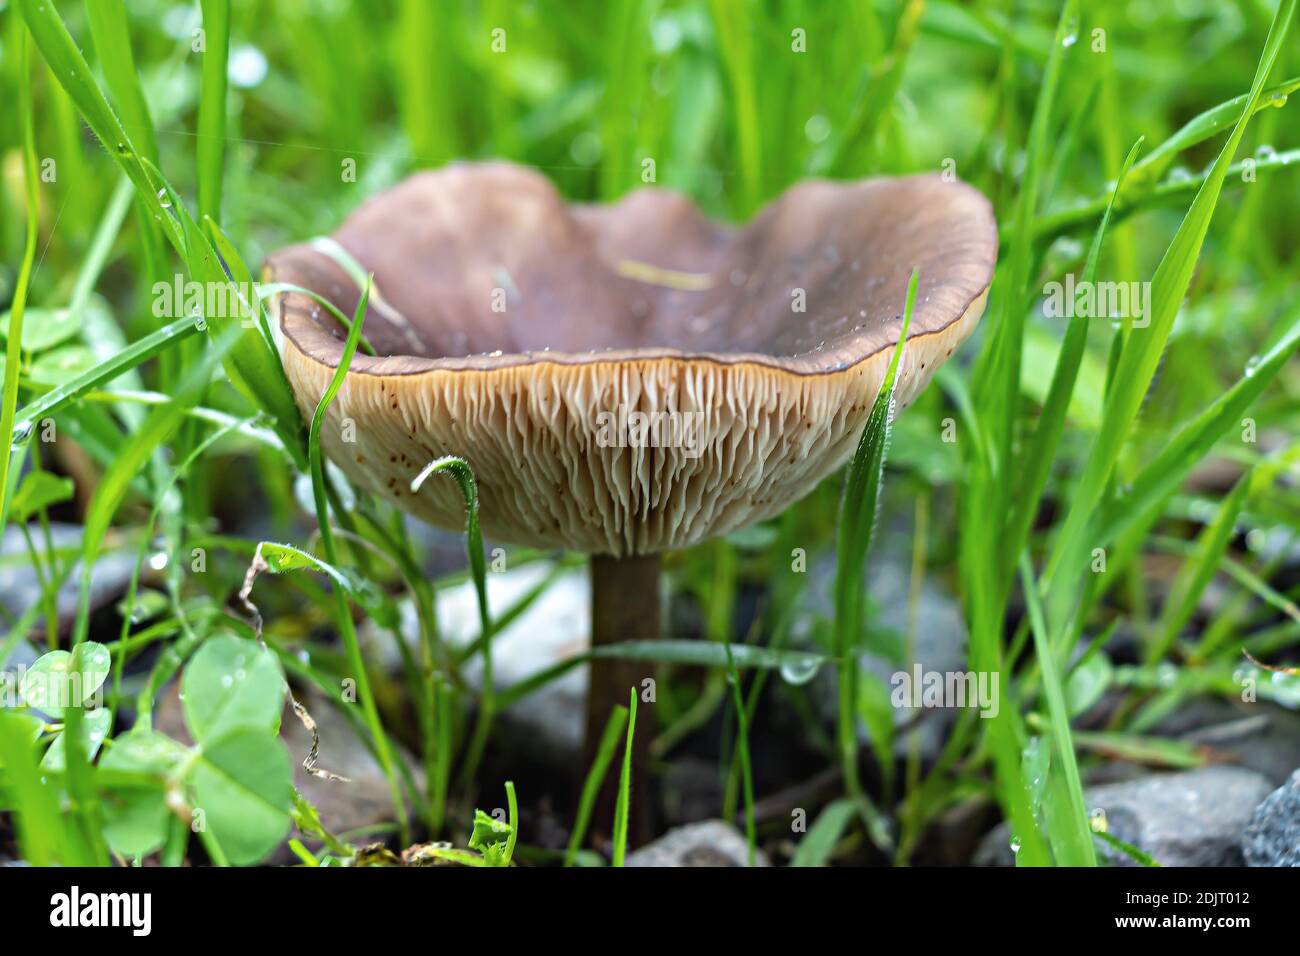 Reife Pilze im grünen Gras Stockfoto